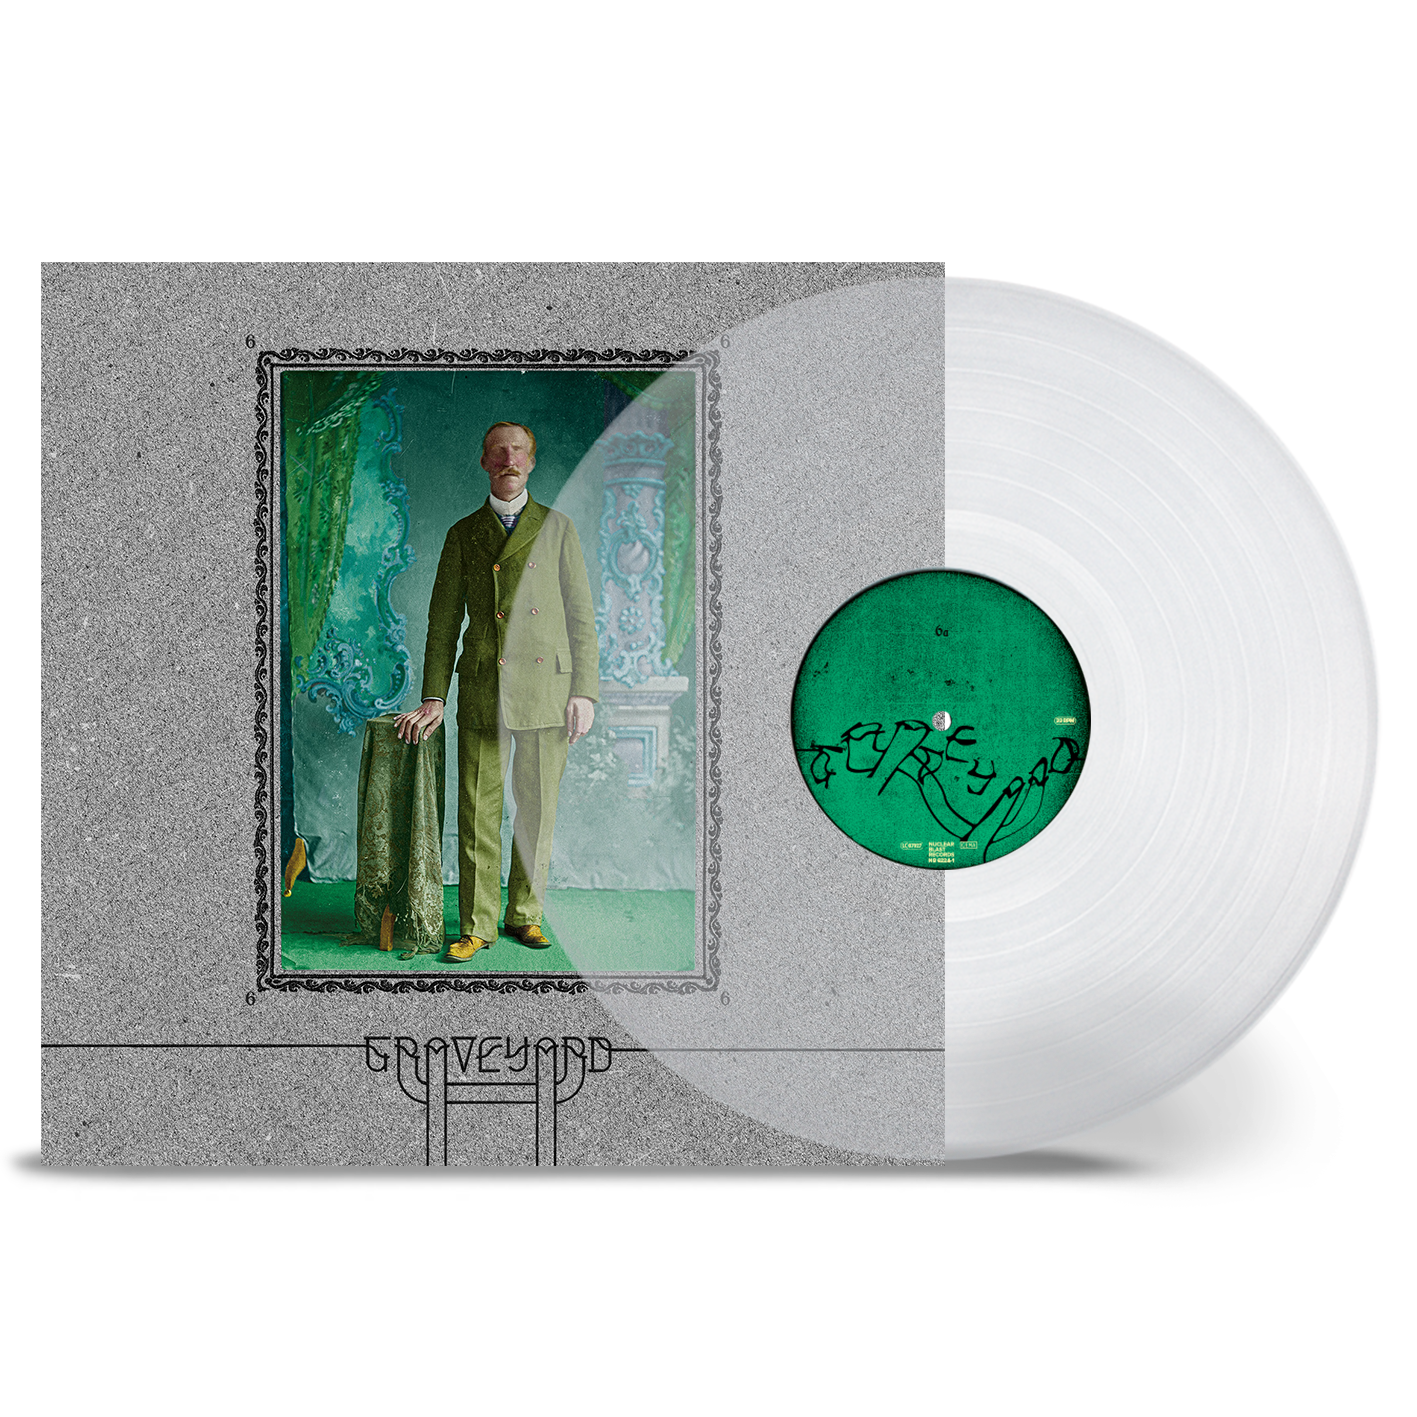 Graveyard - 6: Limited Edition Crystal Clear Vinyl LP